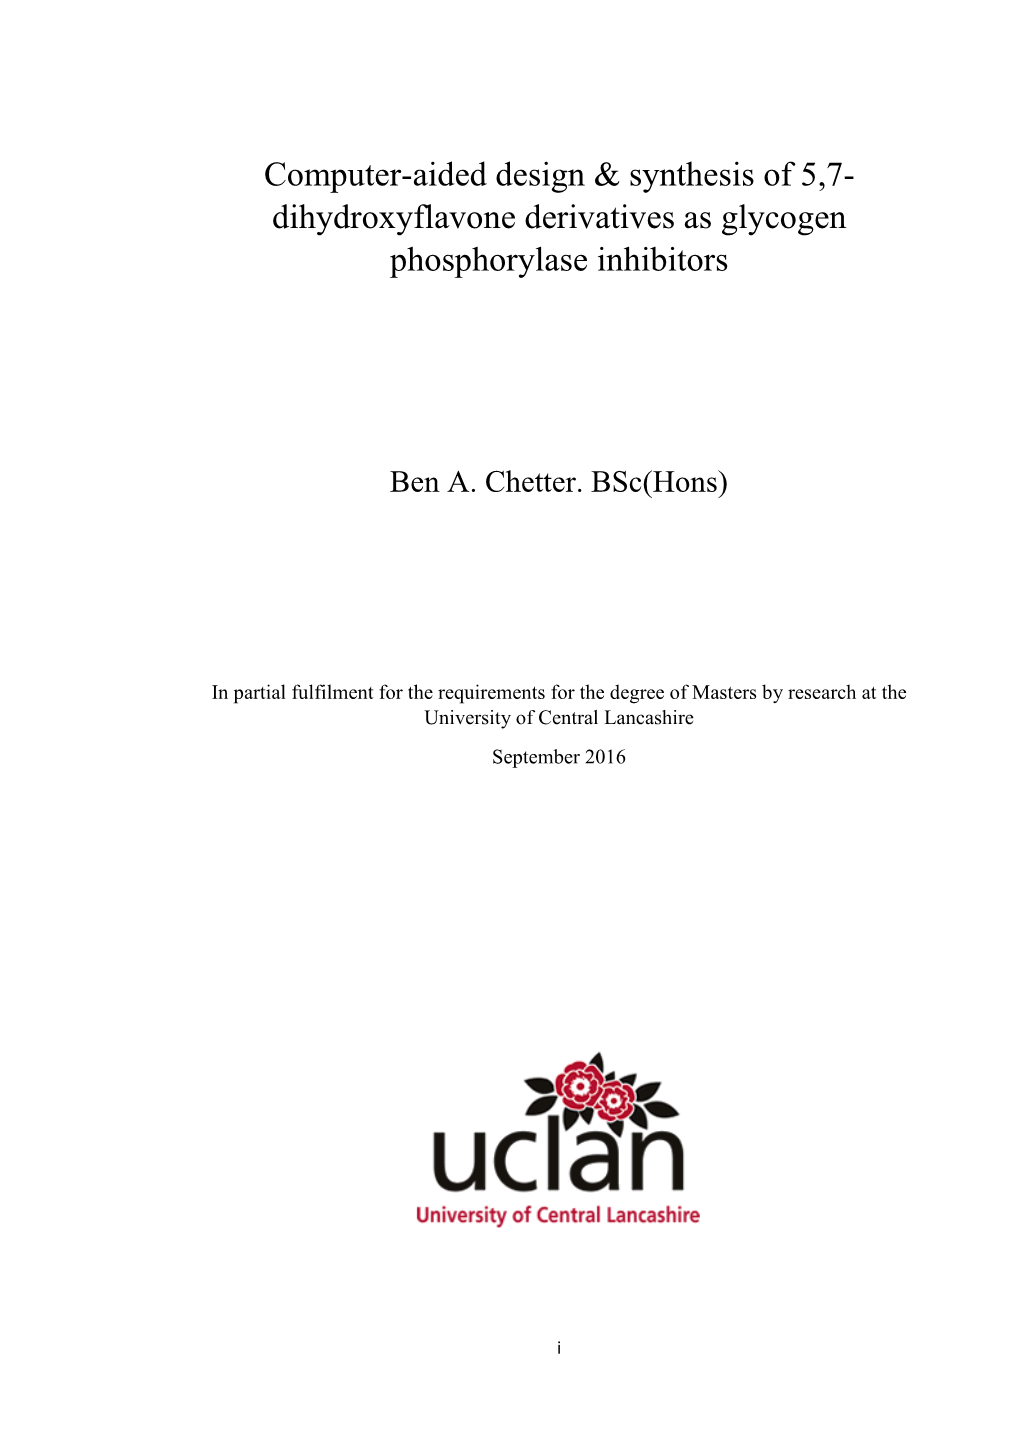 Dihydroxyflavone Derivatives As Glycogen Phosphorylase Inhibitors